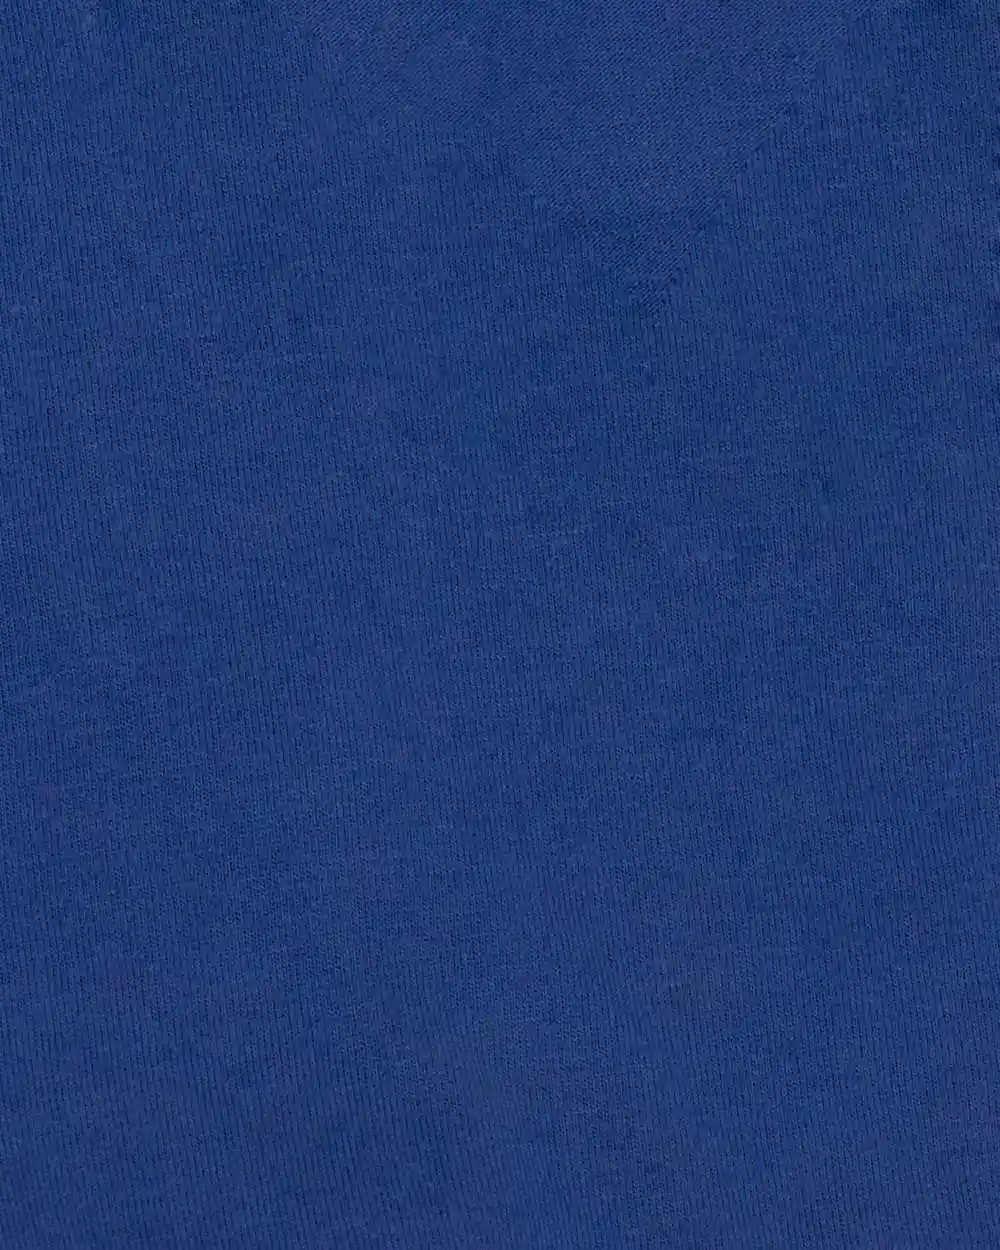 Camiseta lisa cuello v manga corta azul marino